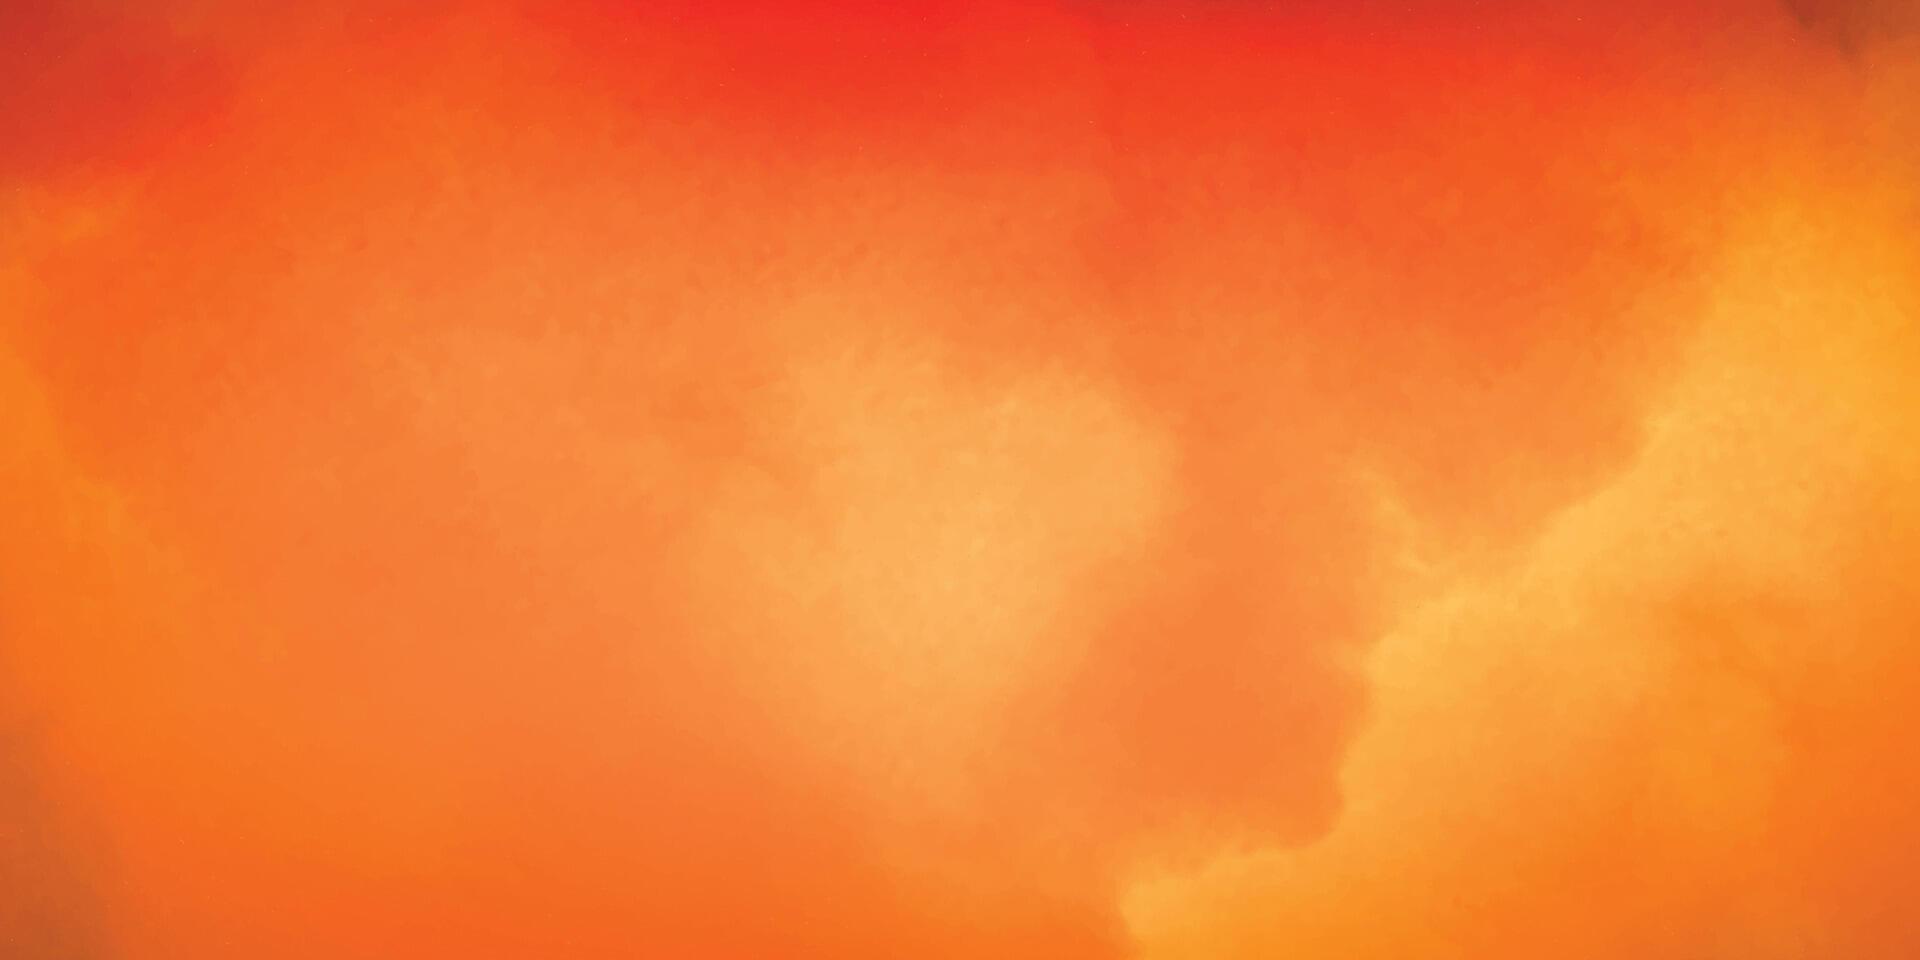 waterverf rood oranje geschilderd achtergrond. oranje zon wolken achtergrond. rood en oranje waterverf achtergrond. kleurrijk grunge structuur vector